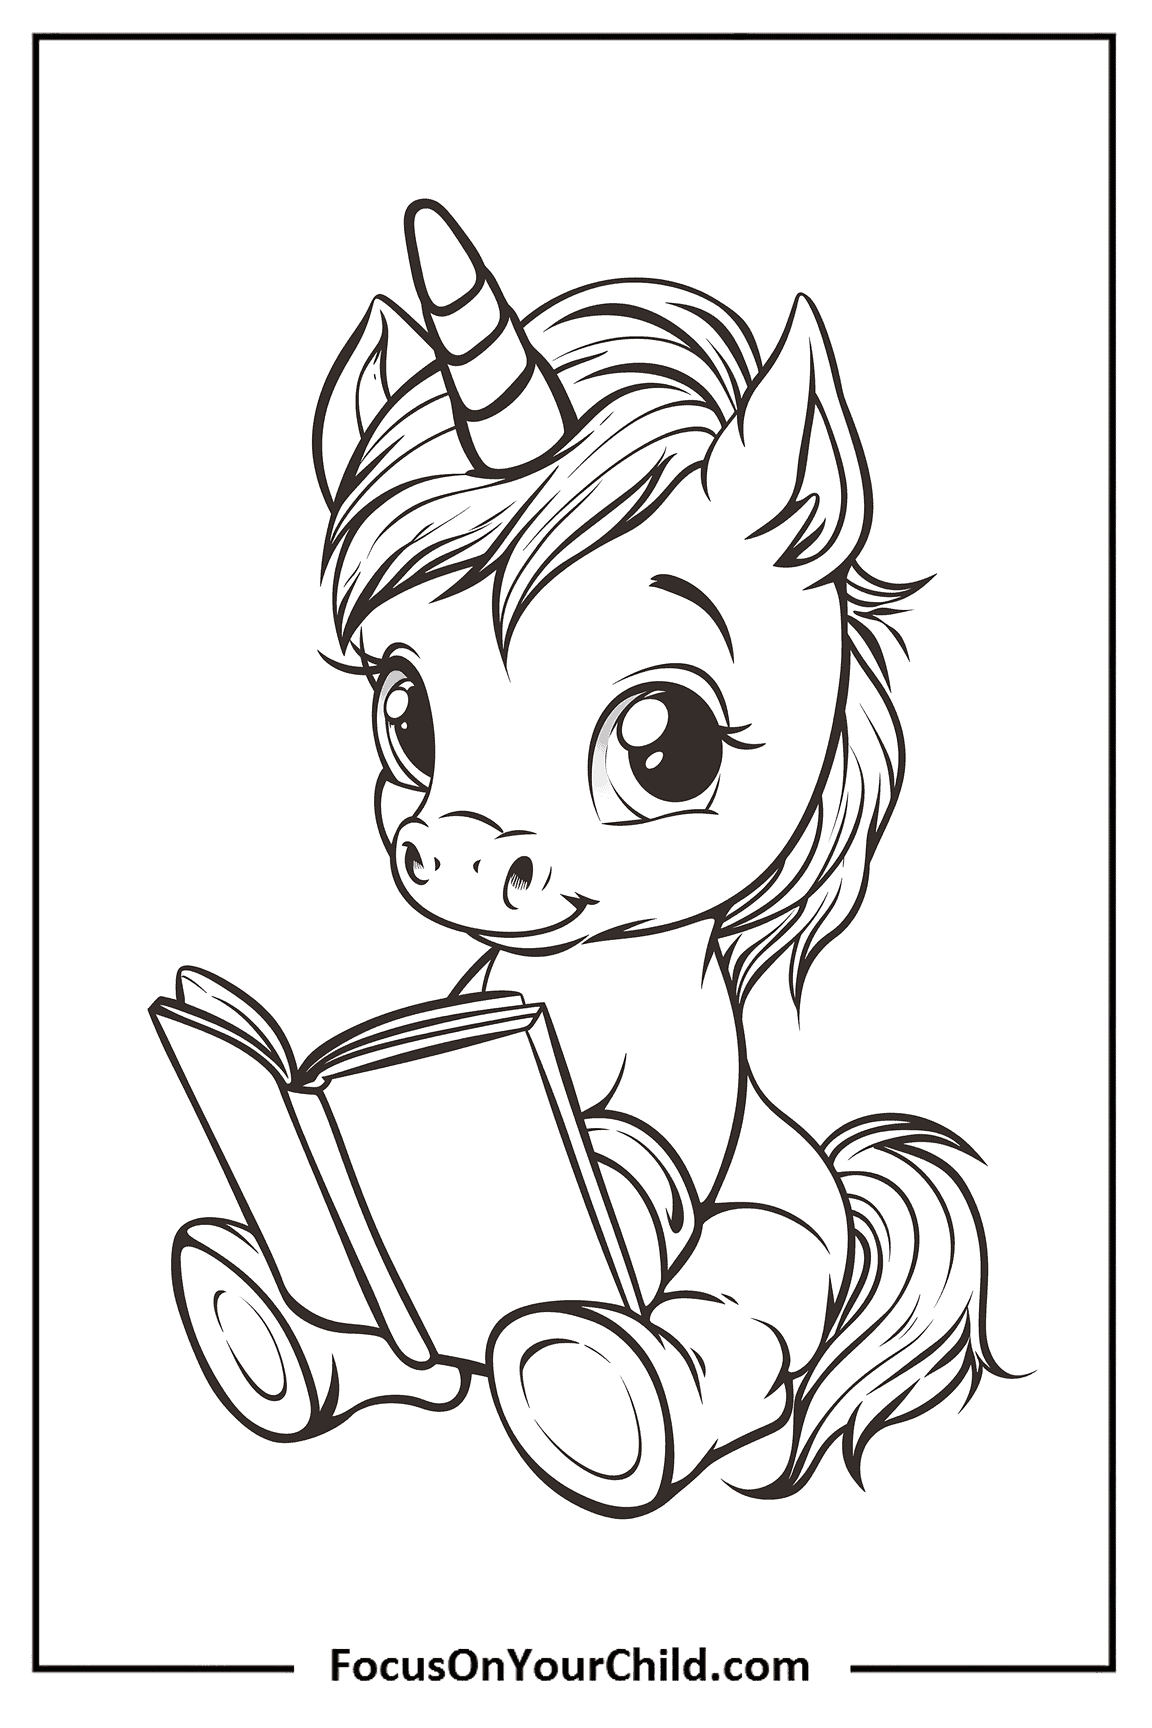 Adorable unicorn reading a book, promoting childrens literacy on FocusOnYourChild.com.